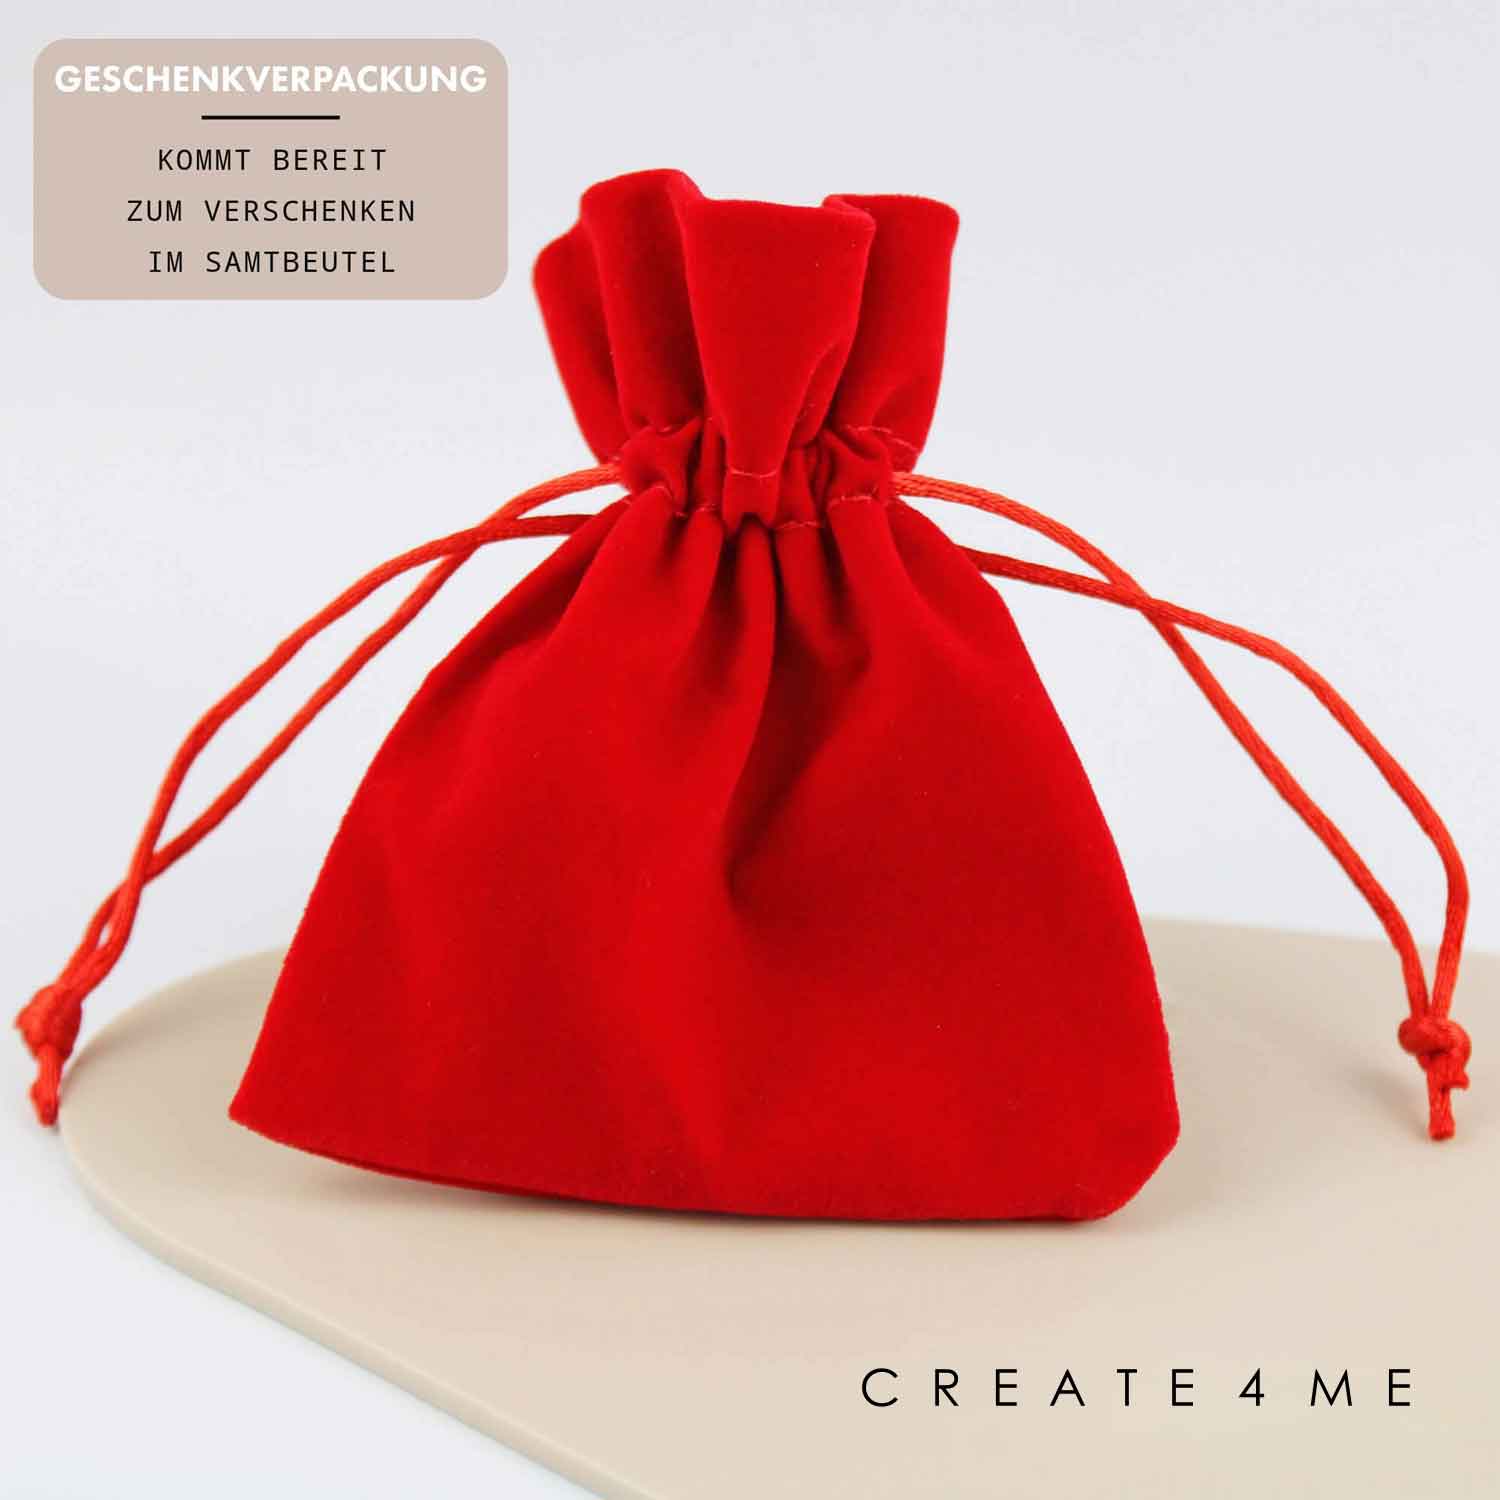 Geschenkverpackung Wundervolle Oma - Schlüsselanhänger personalisiert Create4me